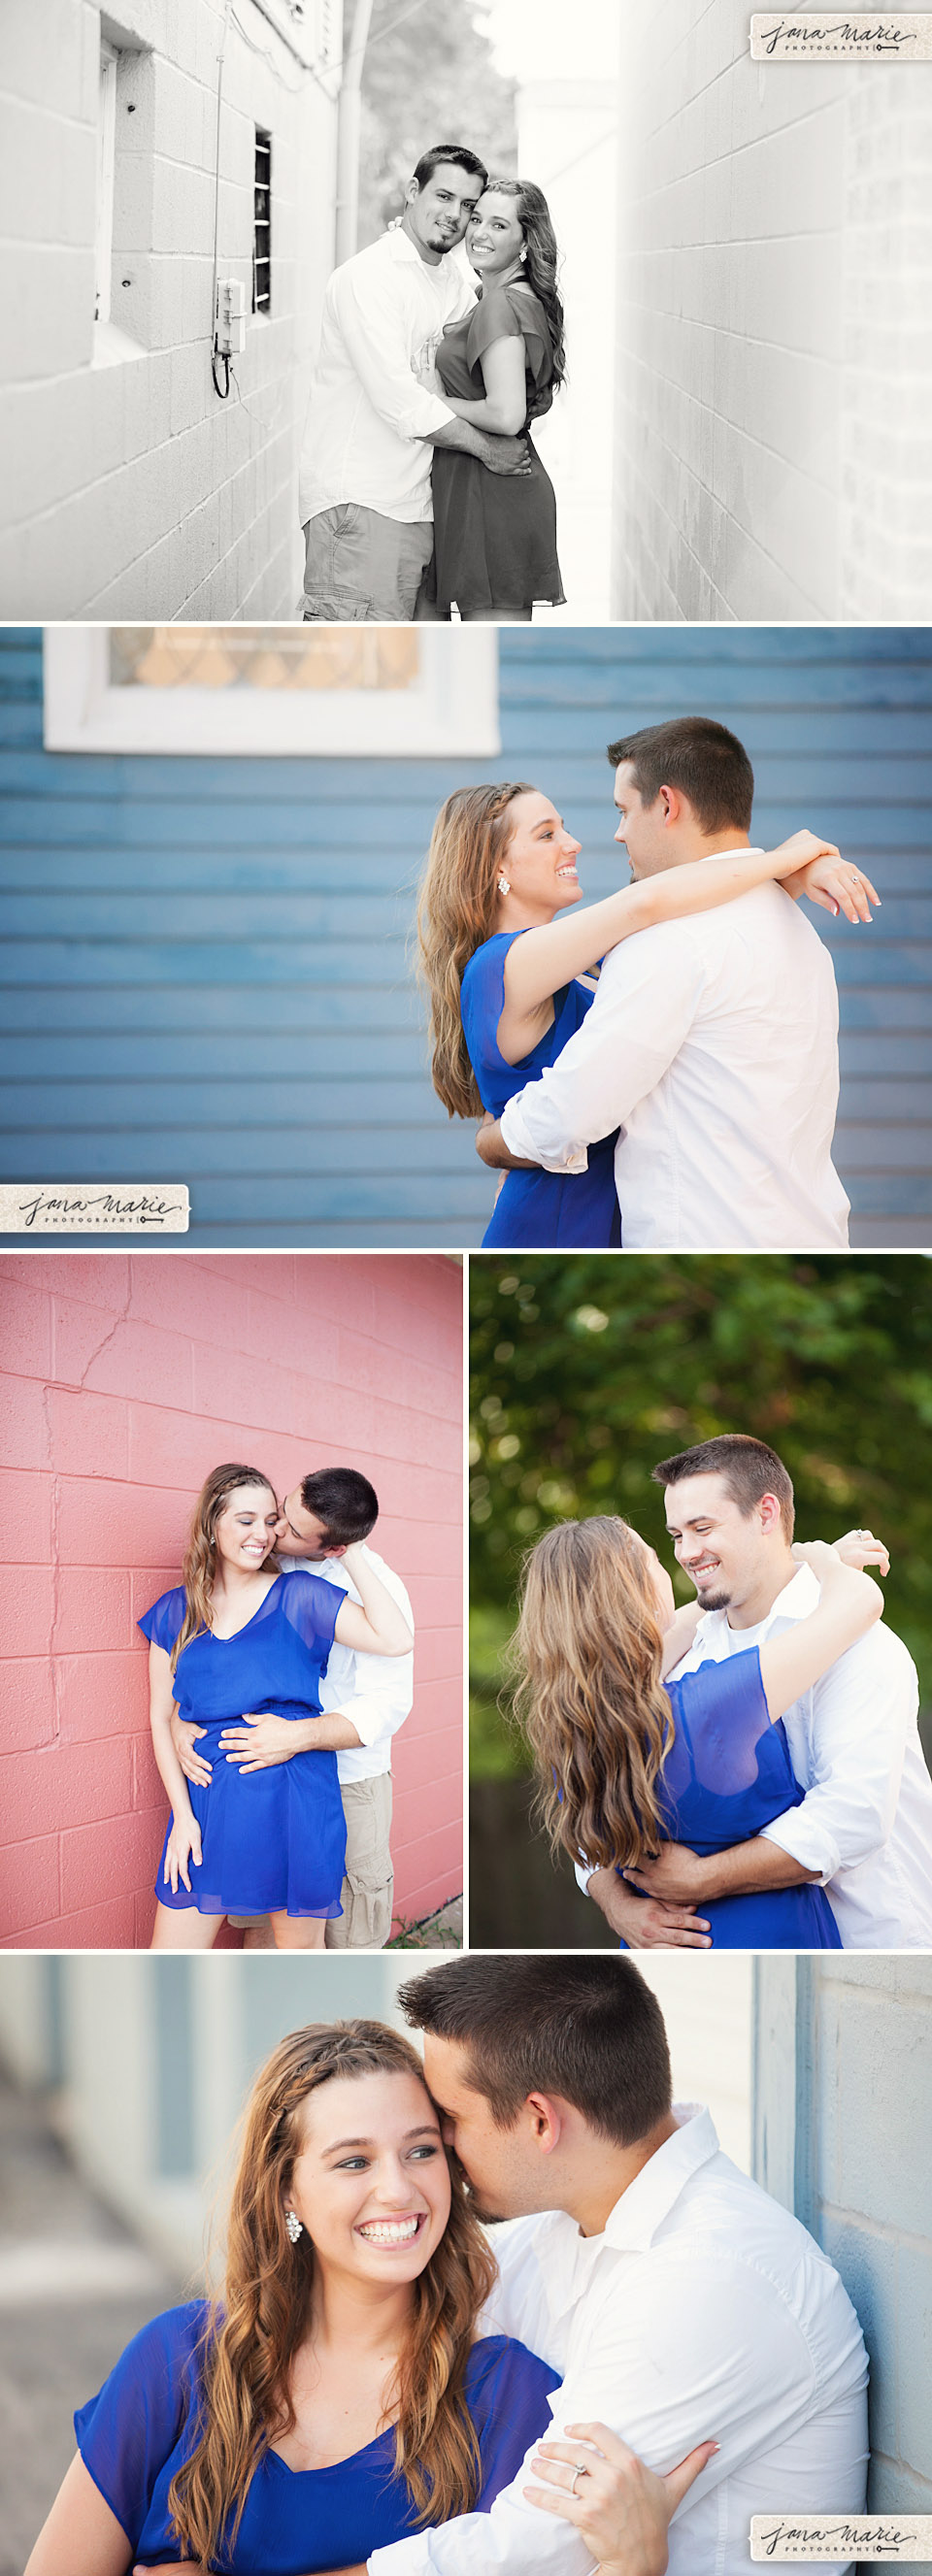 Blue dress, pink wall, blue paint, creative photos, Jana Marie, Beloved Photography, Independence Missouri